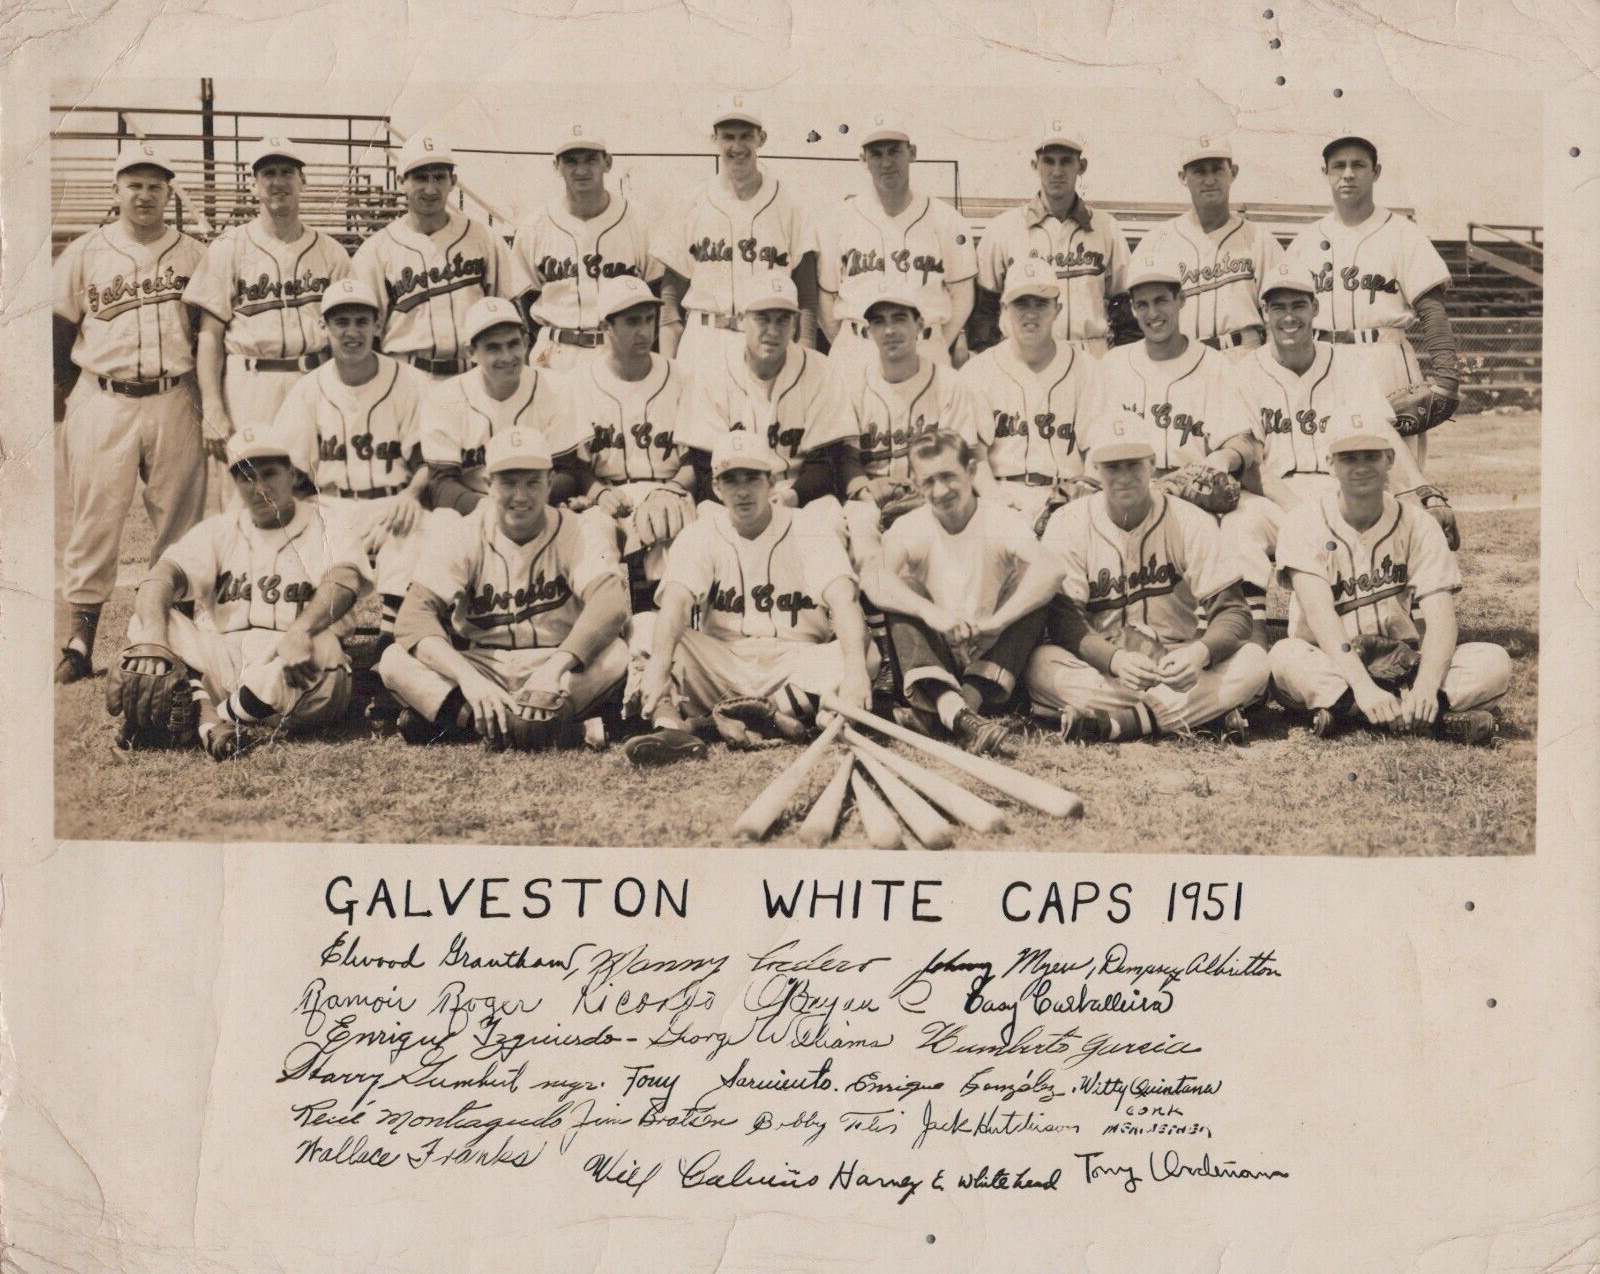 GALVESTON WHITE CAPS BASEBALL TEAM SIGNED ALL PLAYERS PORTRAIT  1951 PHOTO 150